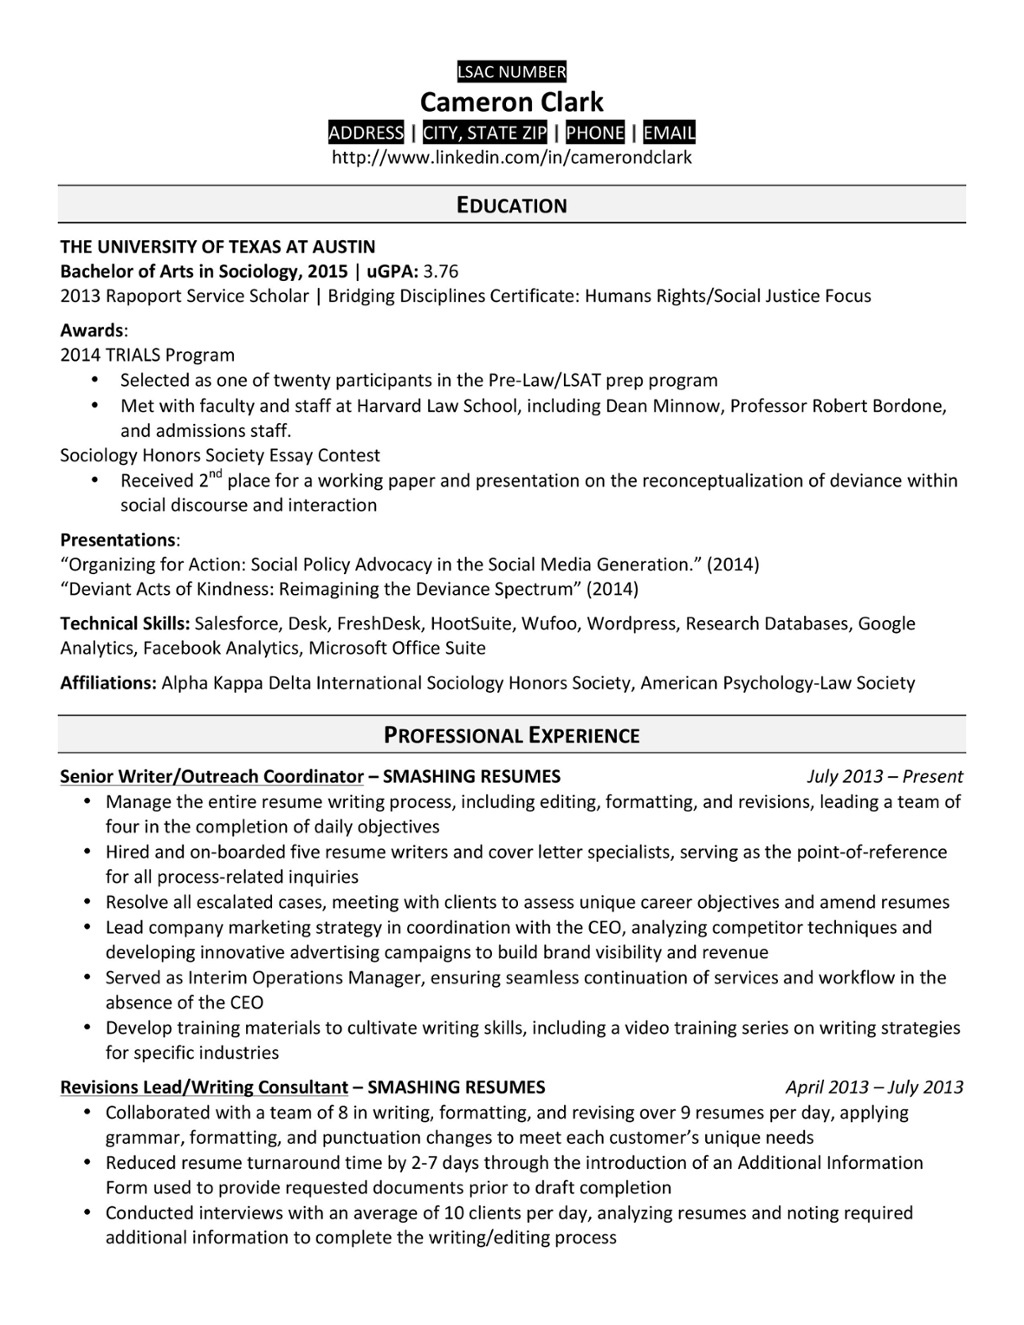 Phd application resume